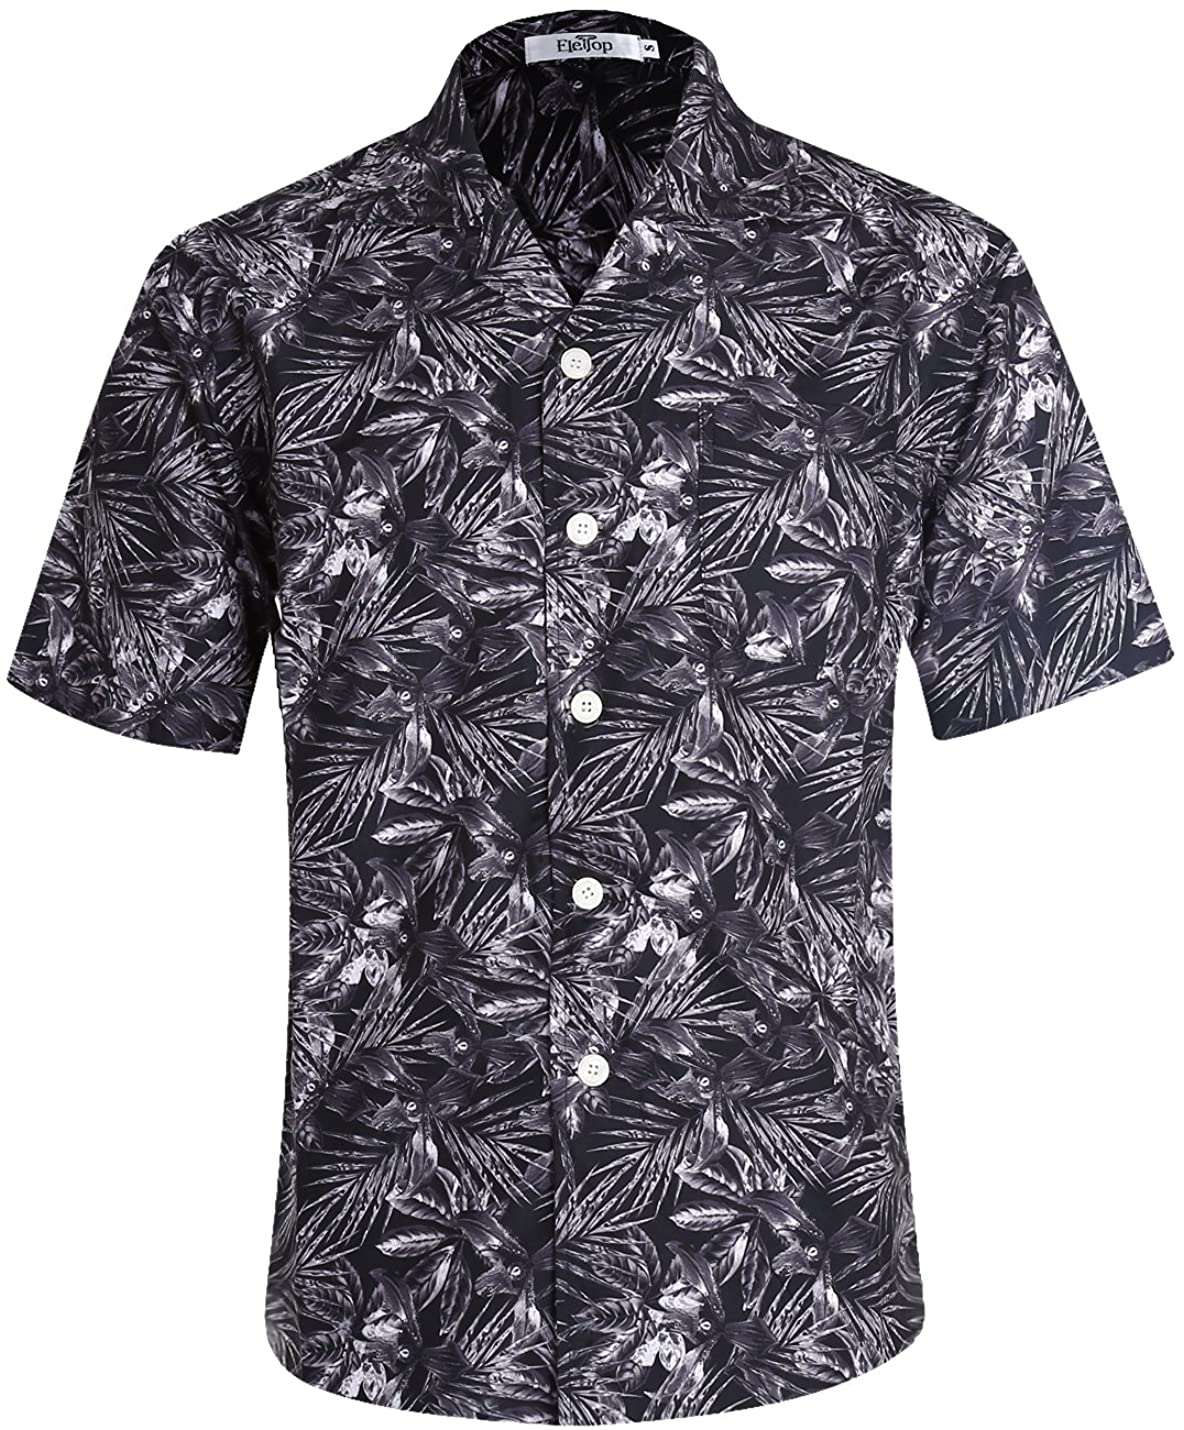 APTRO Men's Hawaiian Shirt 4 Way Stretch Short Sleeve Button Down ...